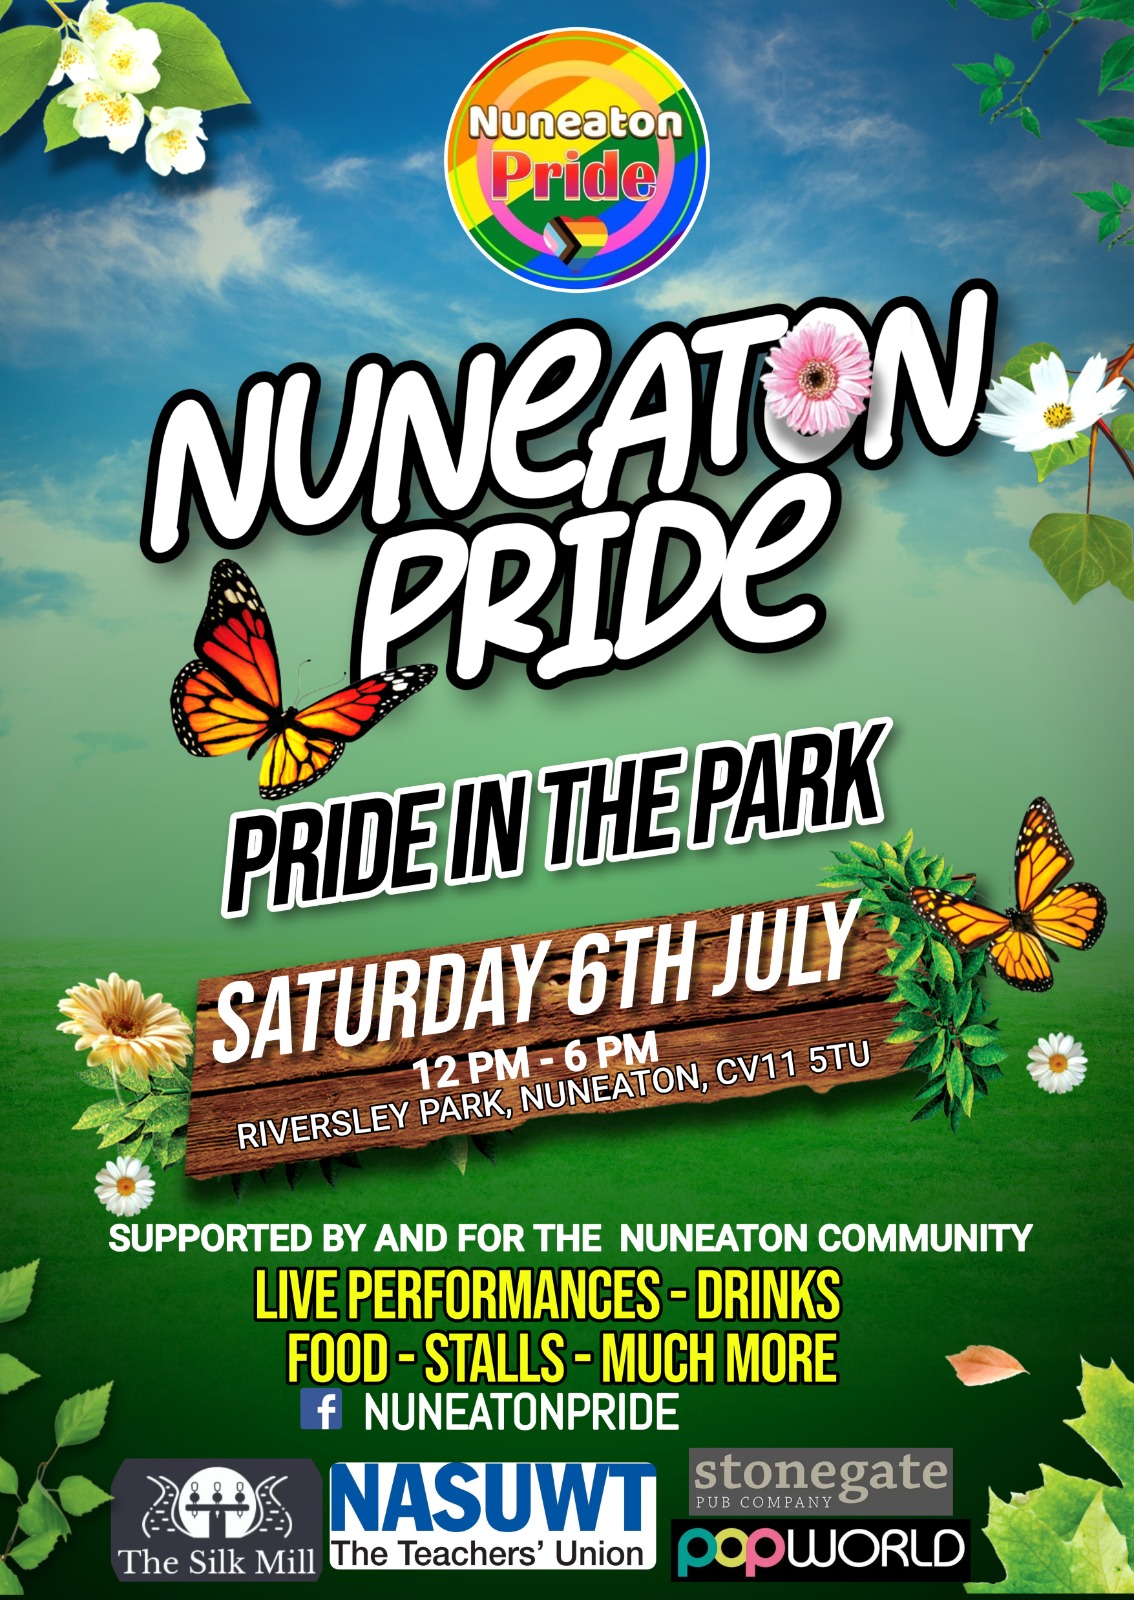 poster advertising Nuneaton Pride on 6 July